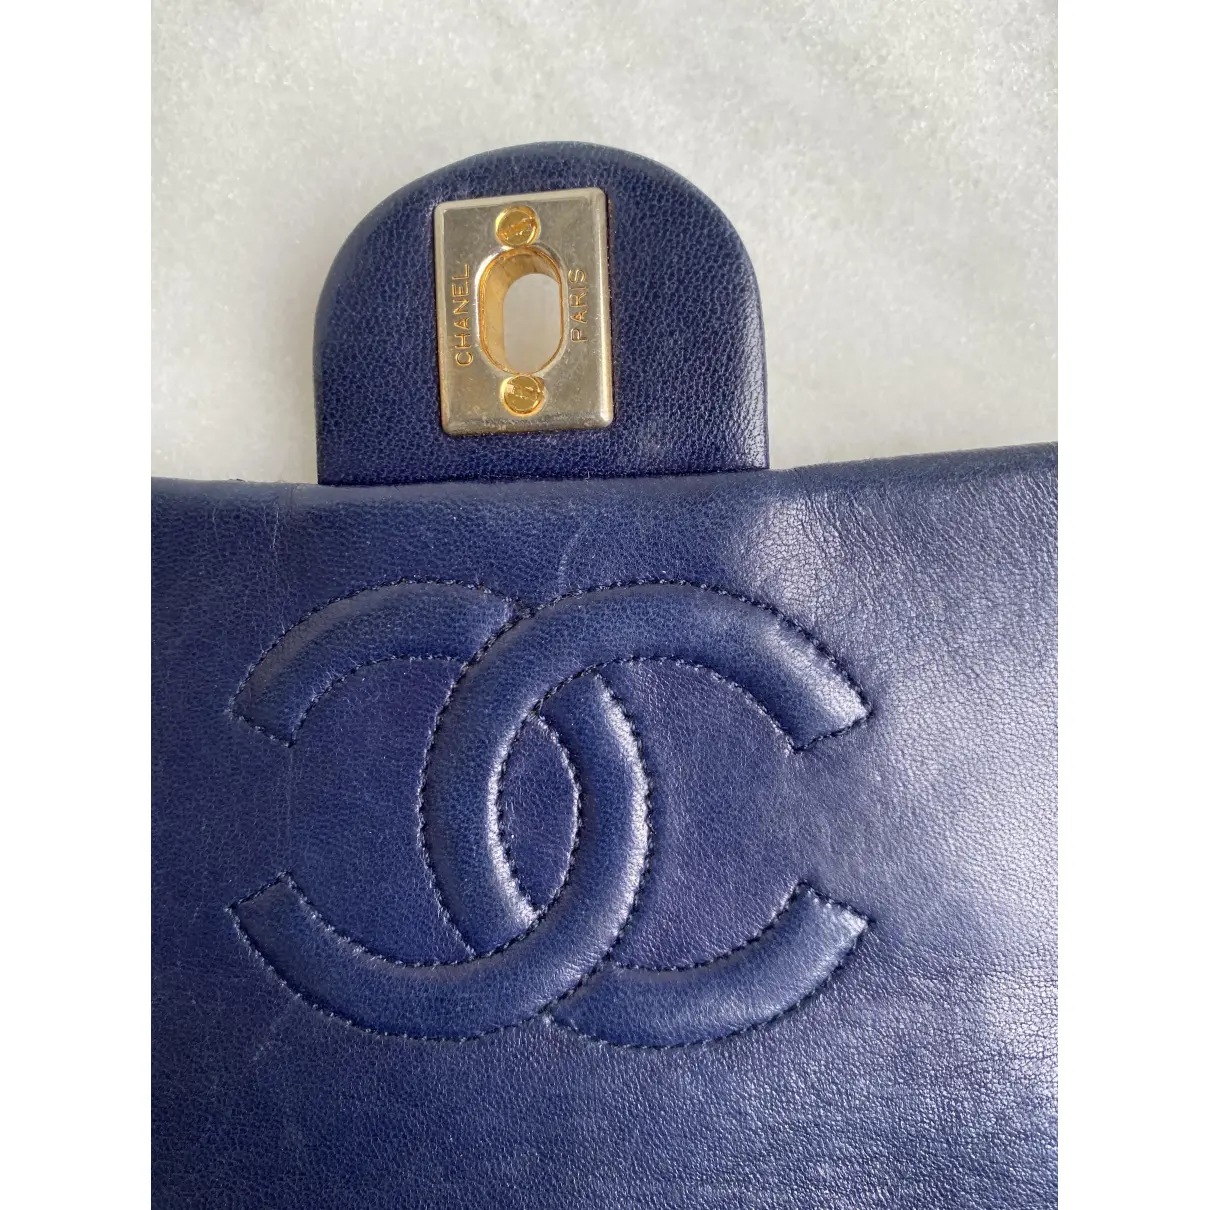 Timeless/Classique leather bag Chanel - Vintage